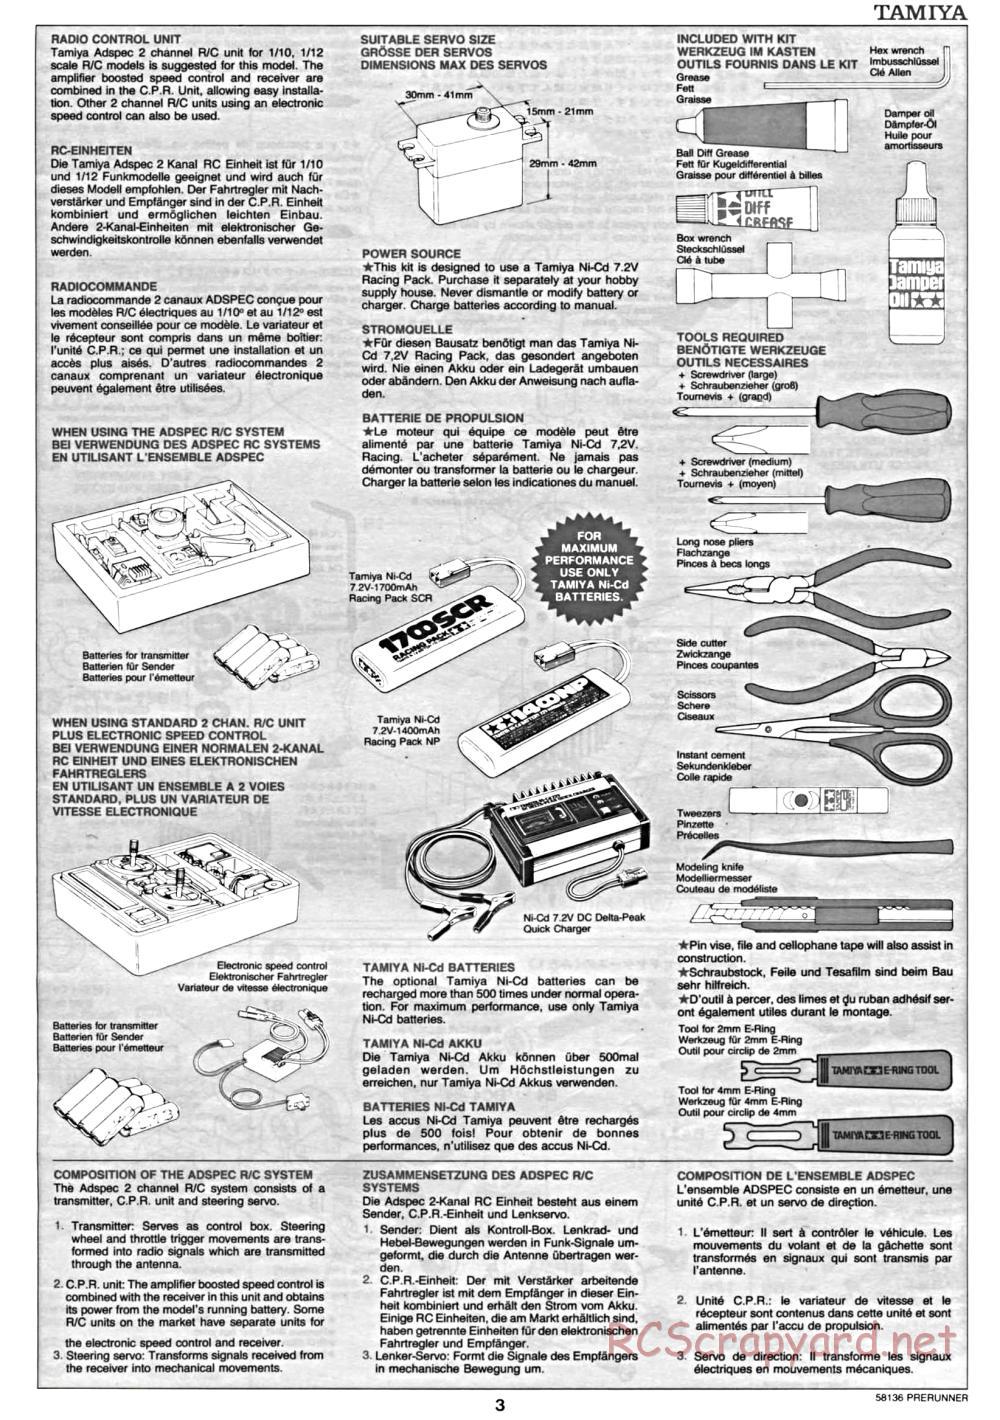 Tamiya - Toyota Prerunner Chassis - Manual - Page 3